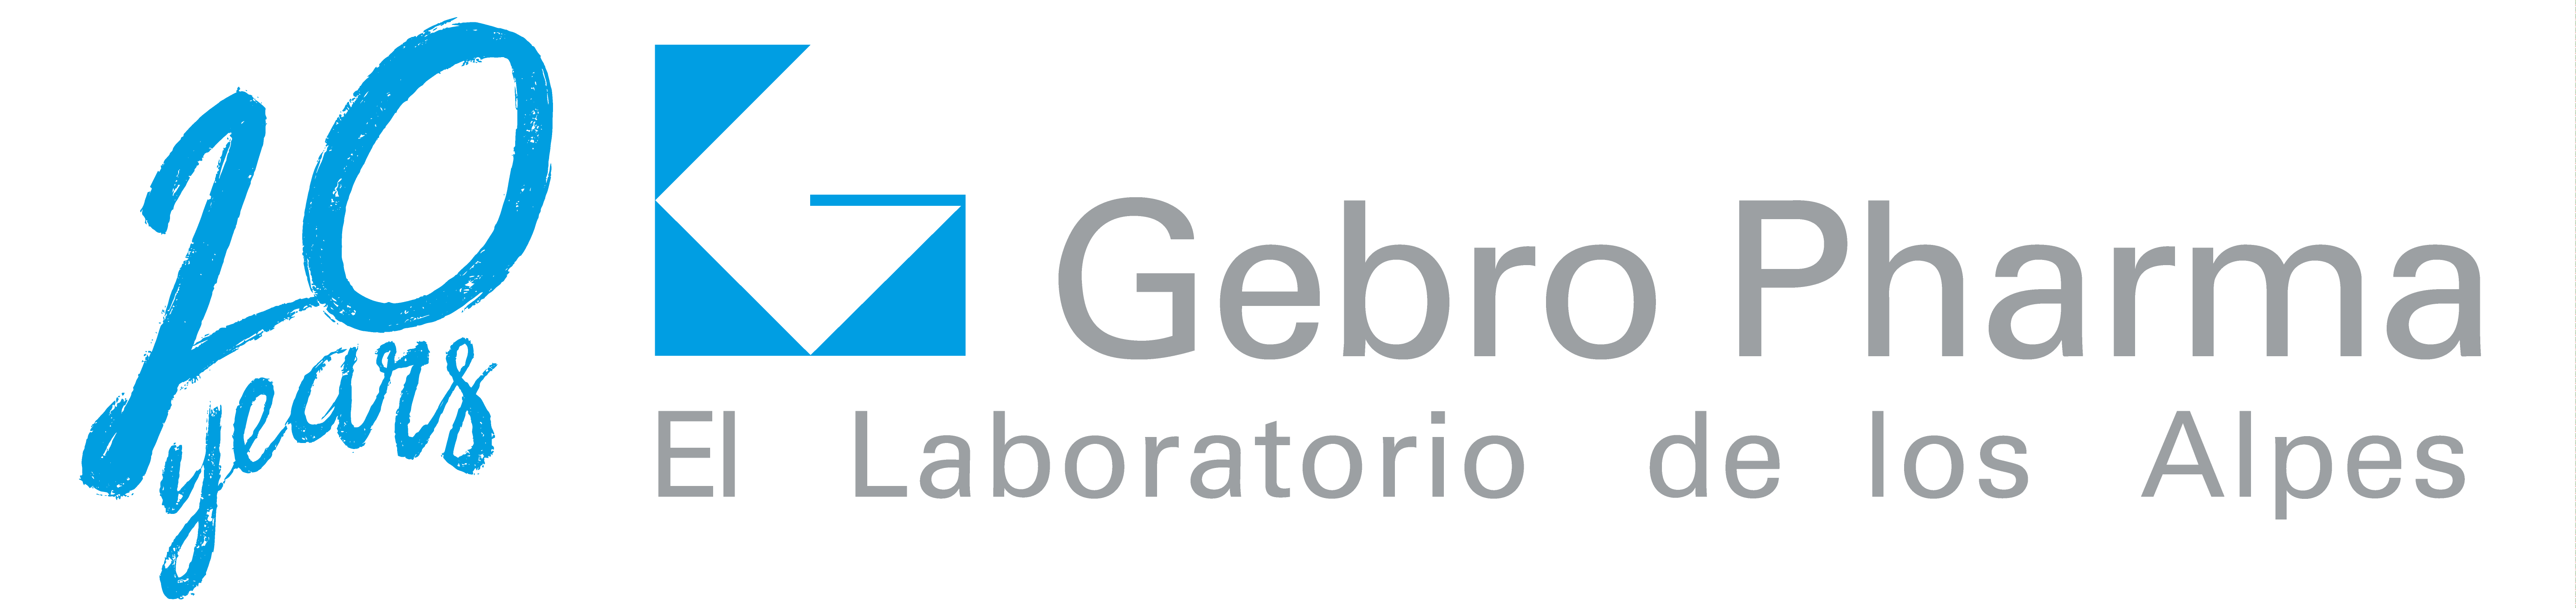 gebro pharma logo